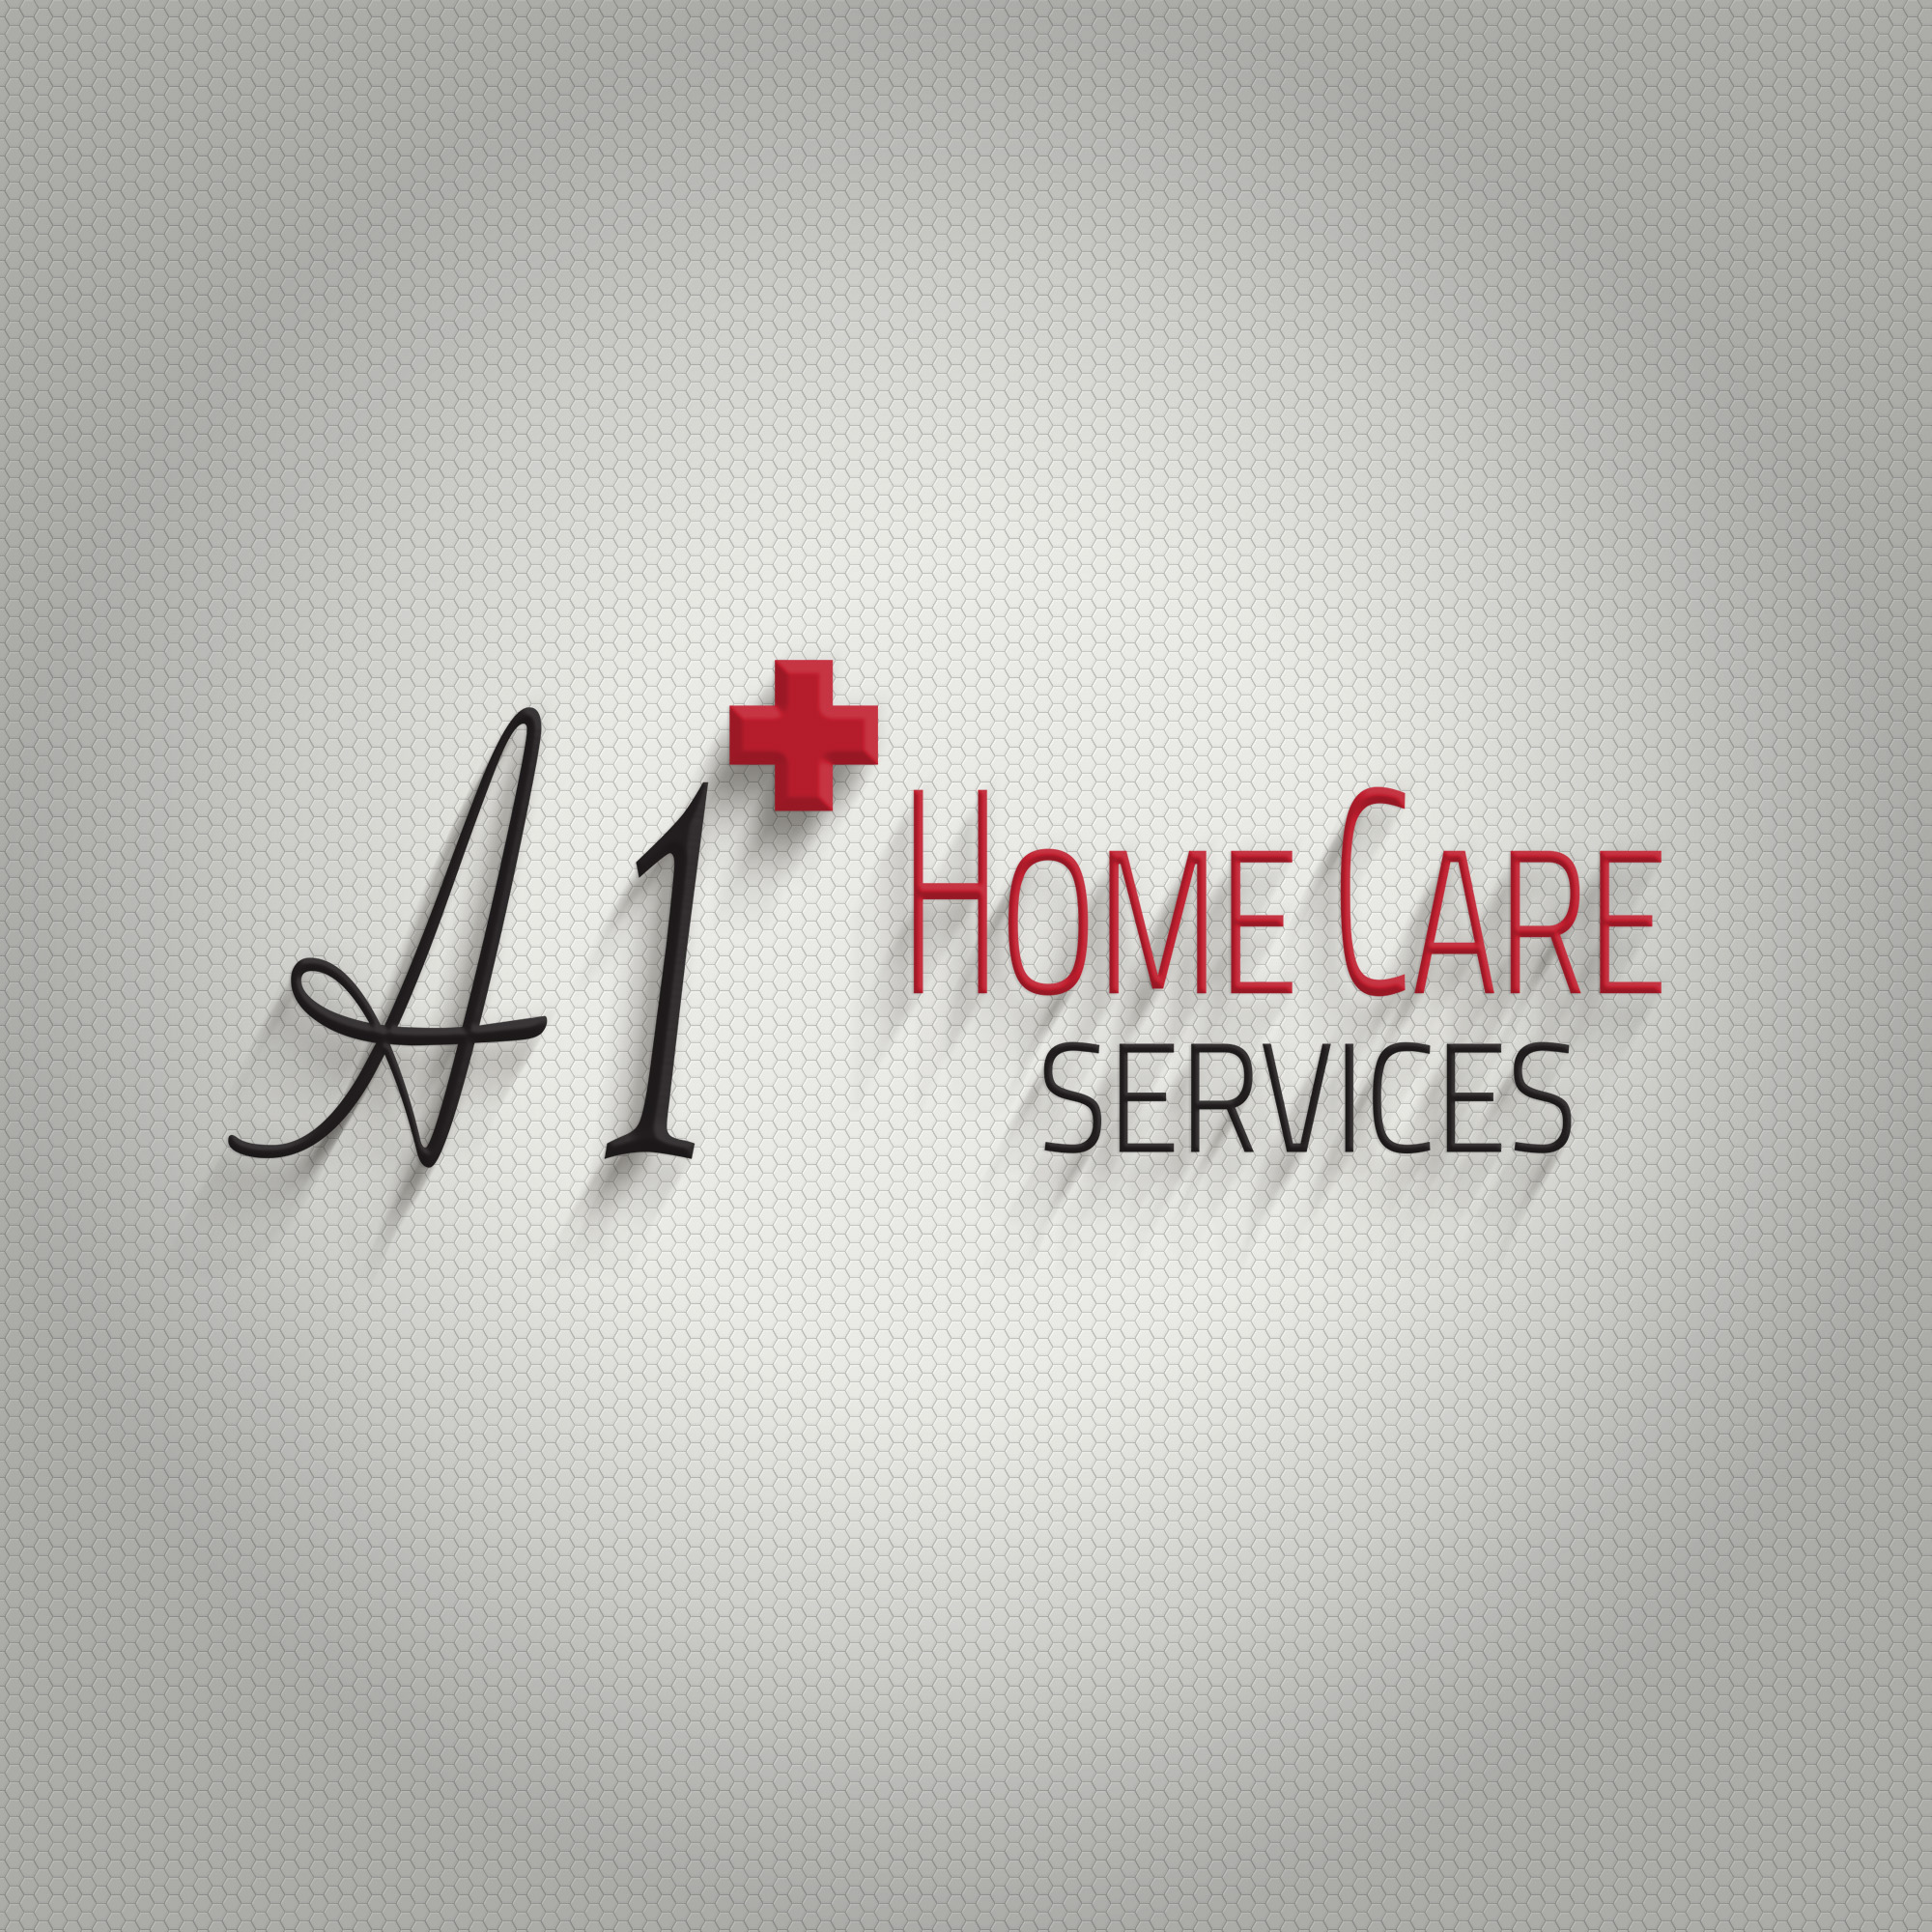 A1 Plus Home Care Services